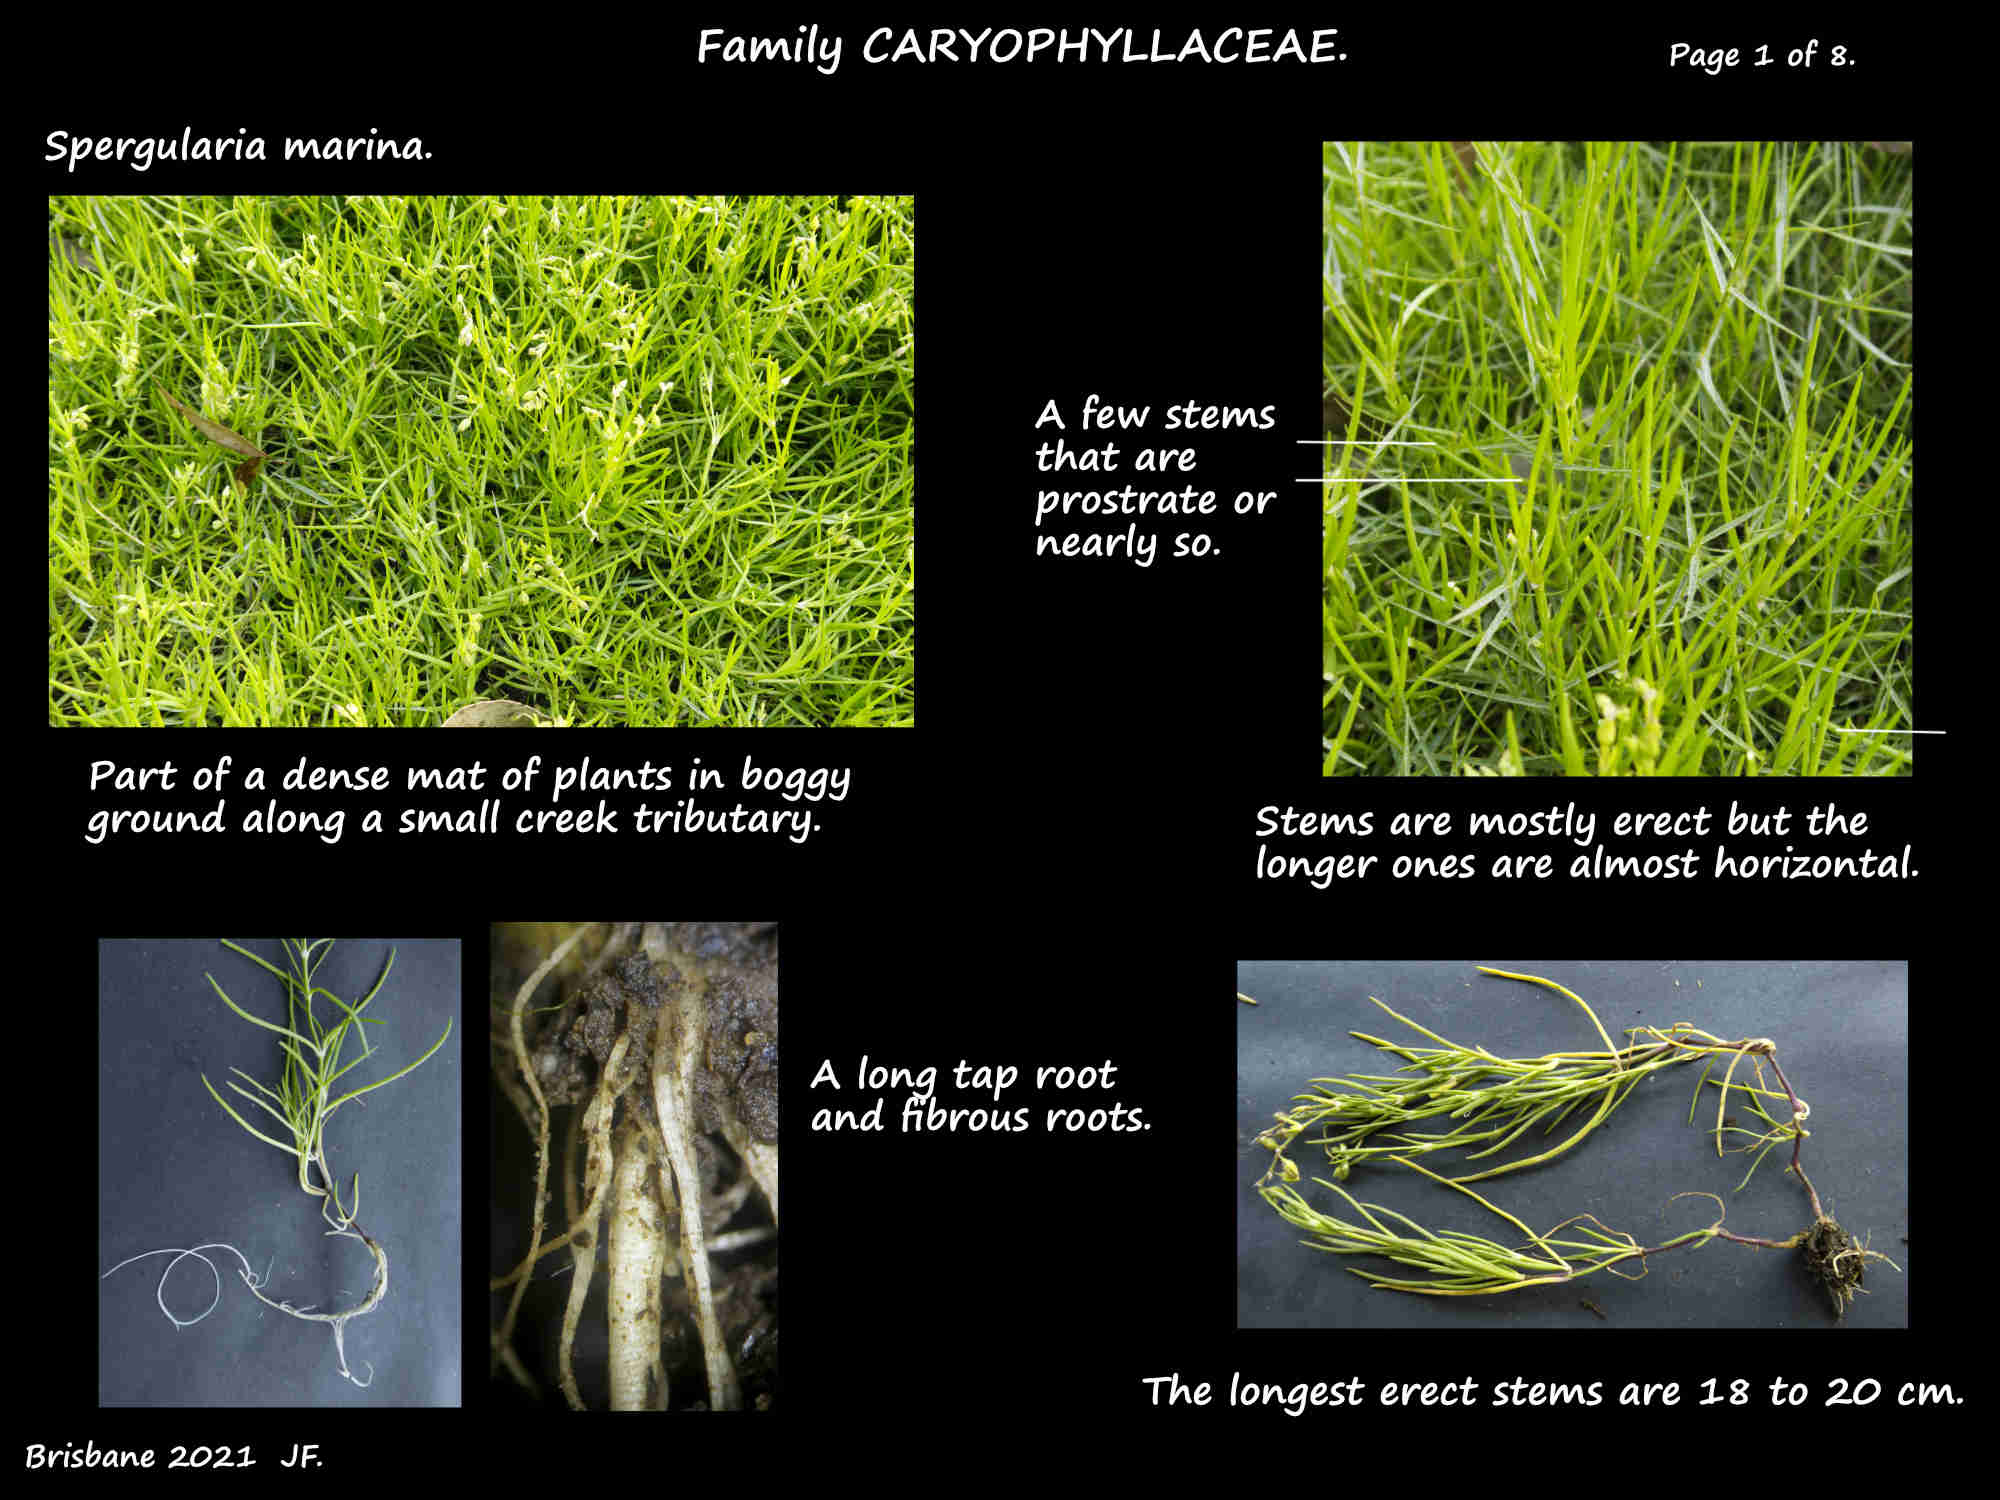 1 Spergularia marina plants & roots